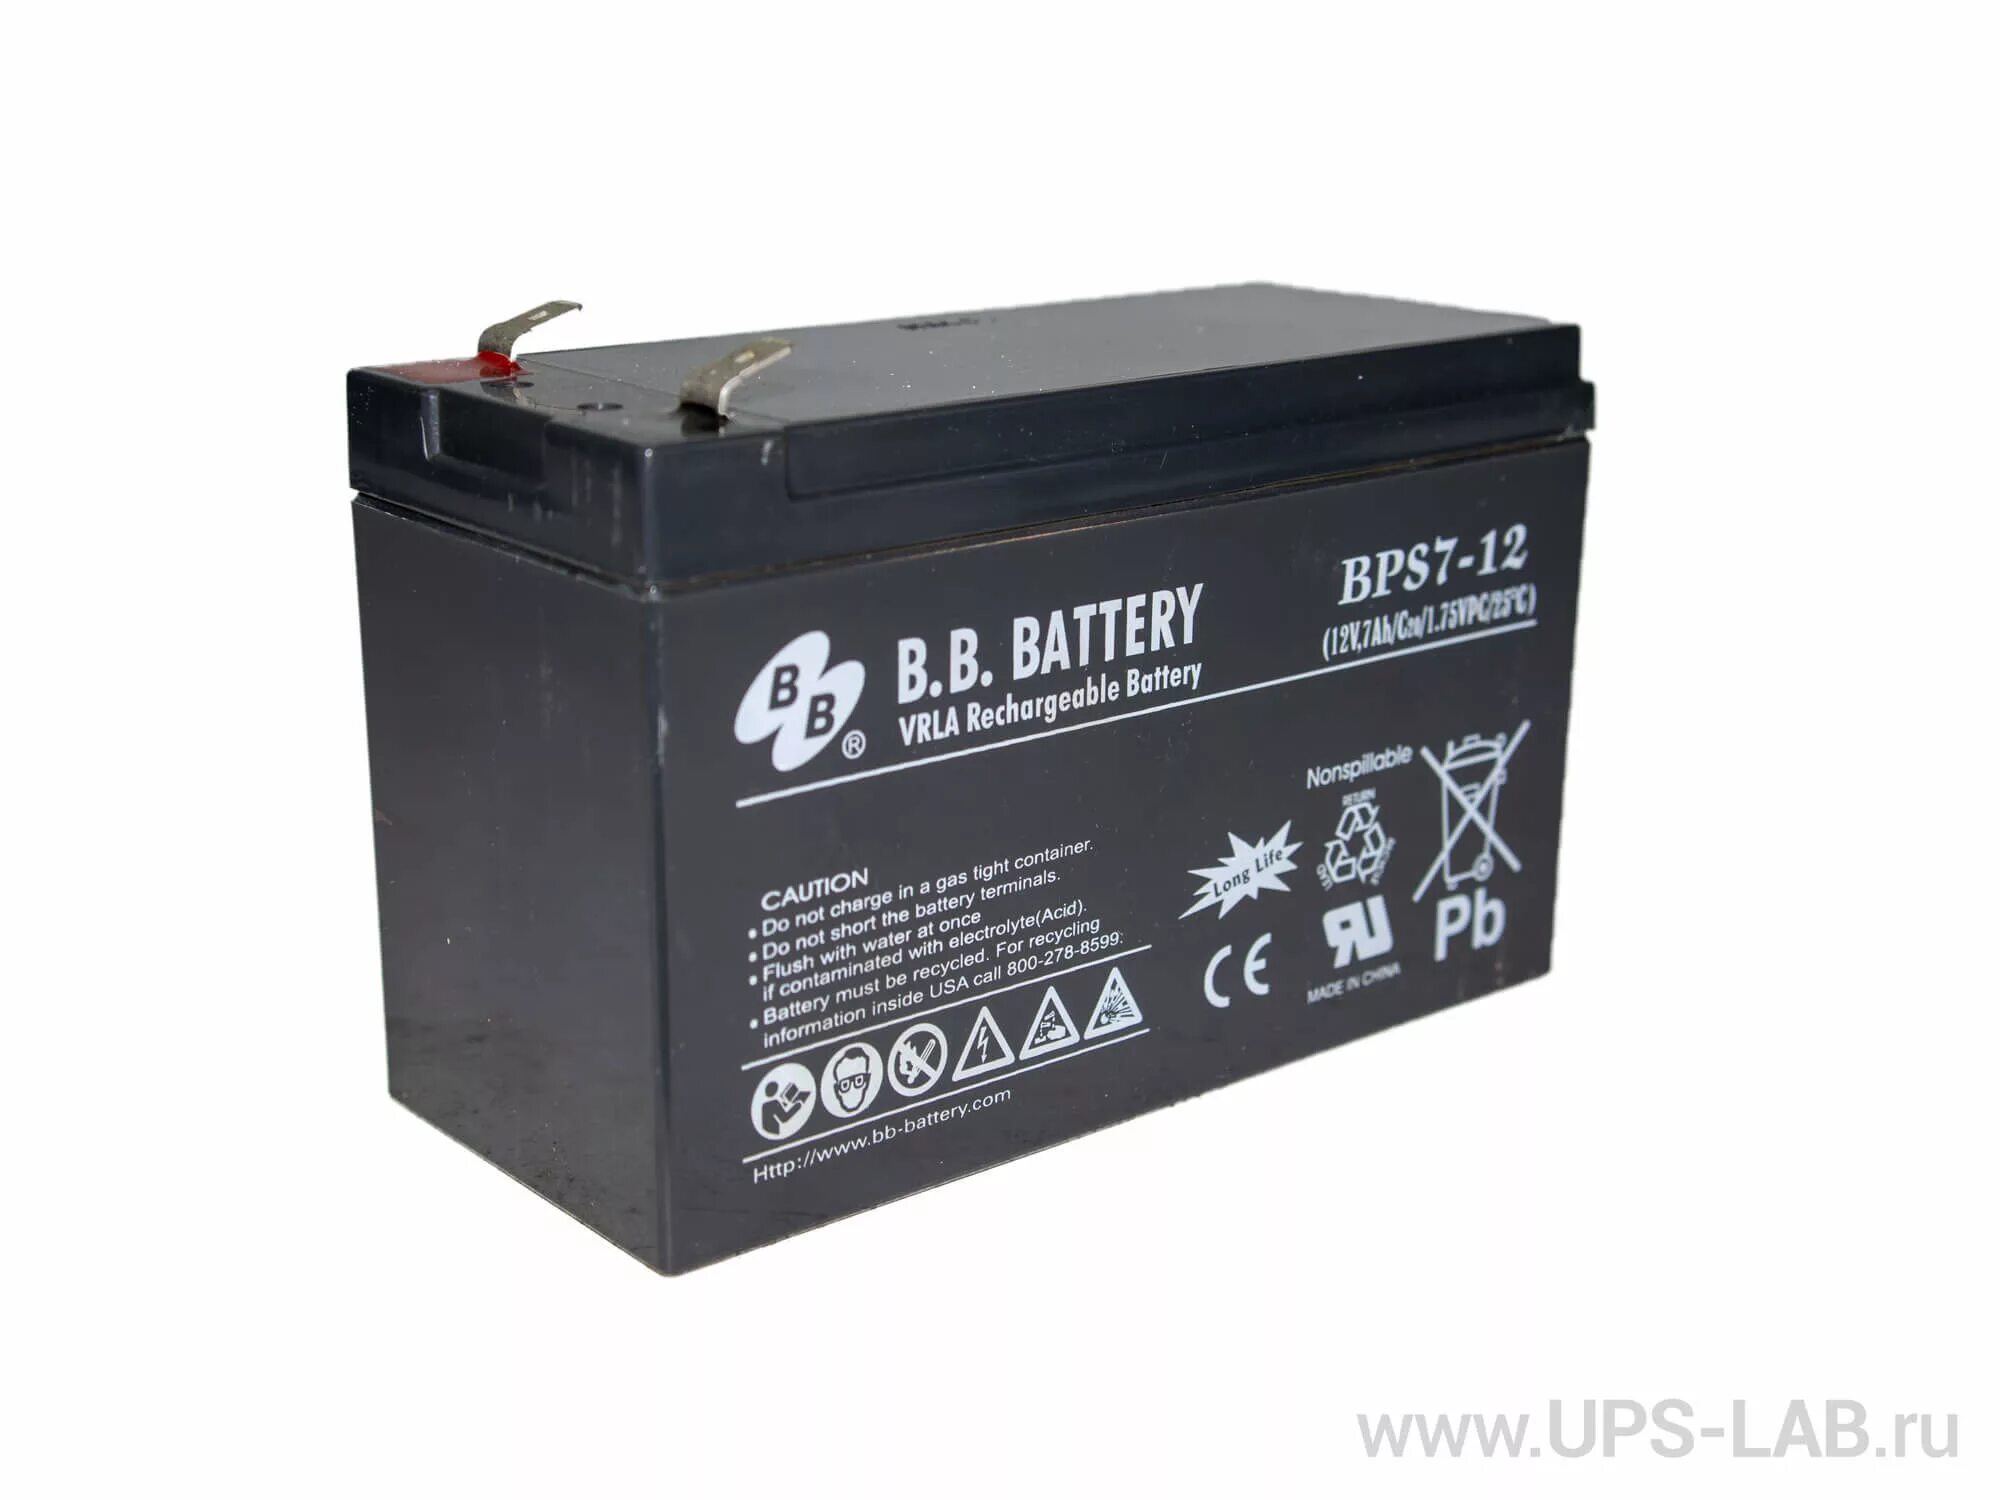 Ptk battery. Аккумулятор для ИБП 12v 7ah b.b. Battery bc7-12. PTK-Battery АКБ 12v - 12ah. АКБ BB Battery BC 7-12. Батарея аккумуляторная PTK-Battery 12-7 ПОЖТЕХКАБЕЛЬ.